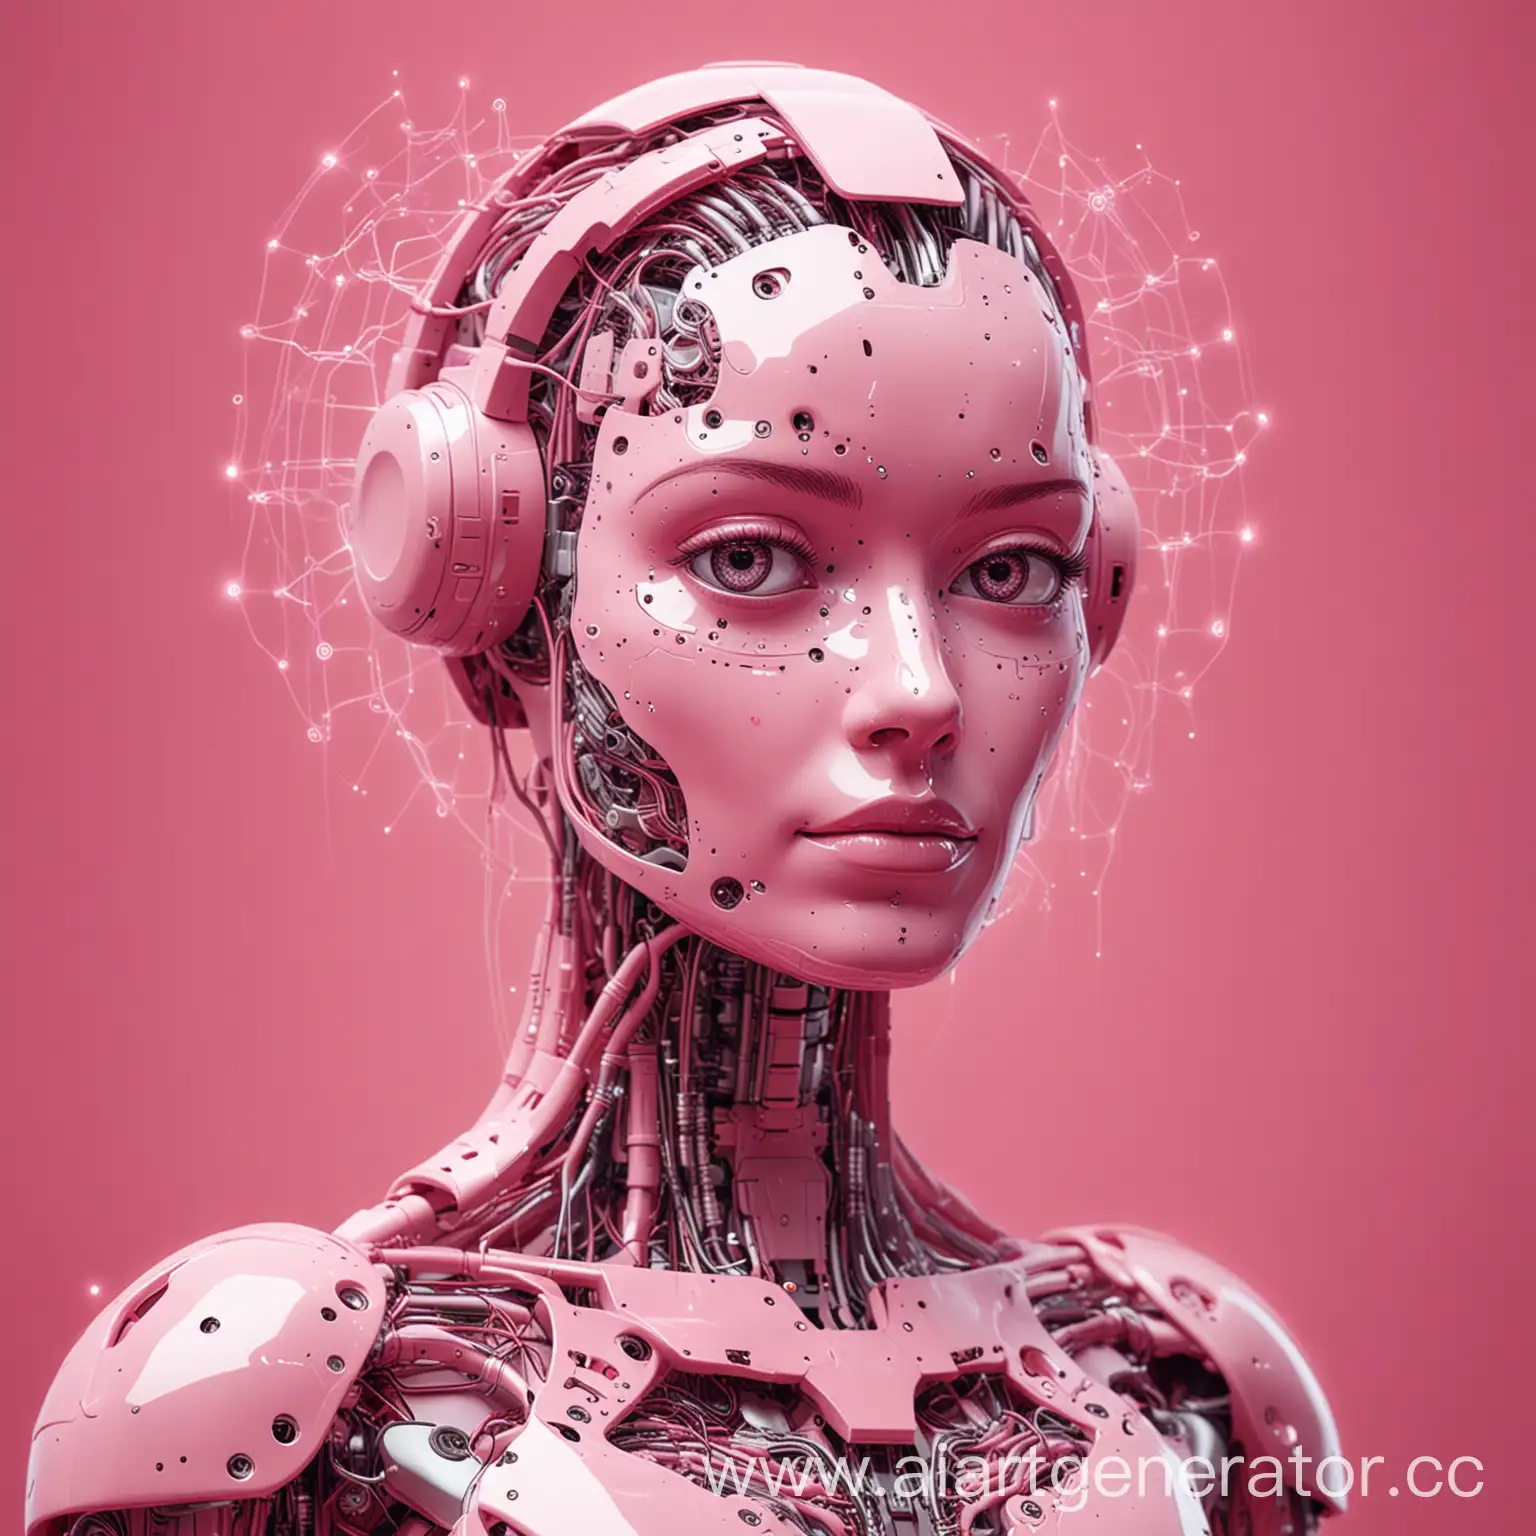 Futuristic-AI-Integration-in-Soft-Pink-Tones